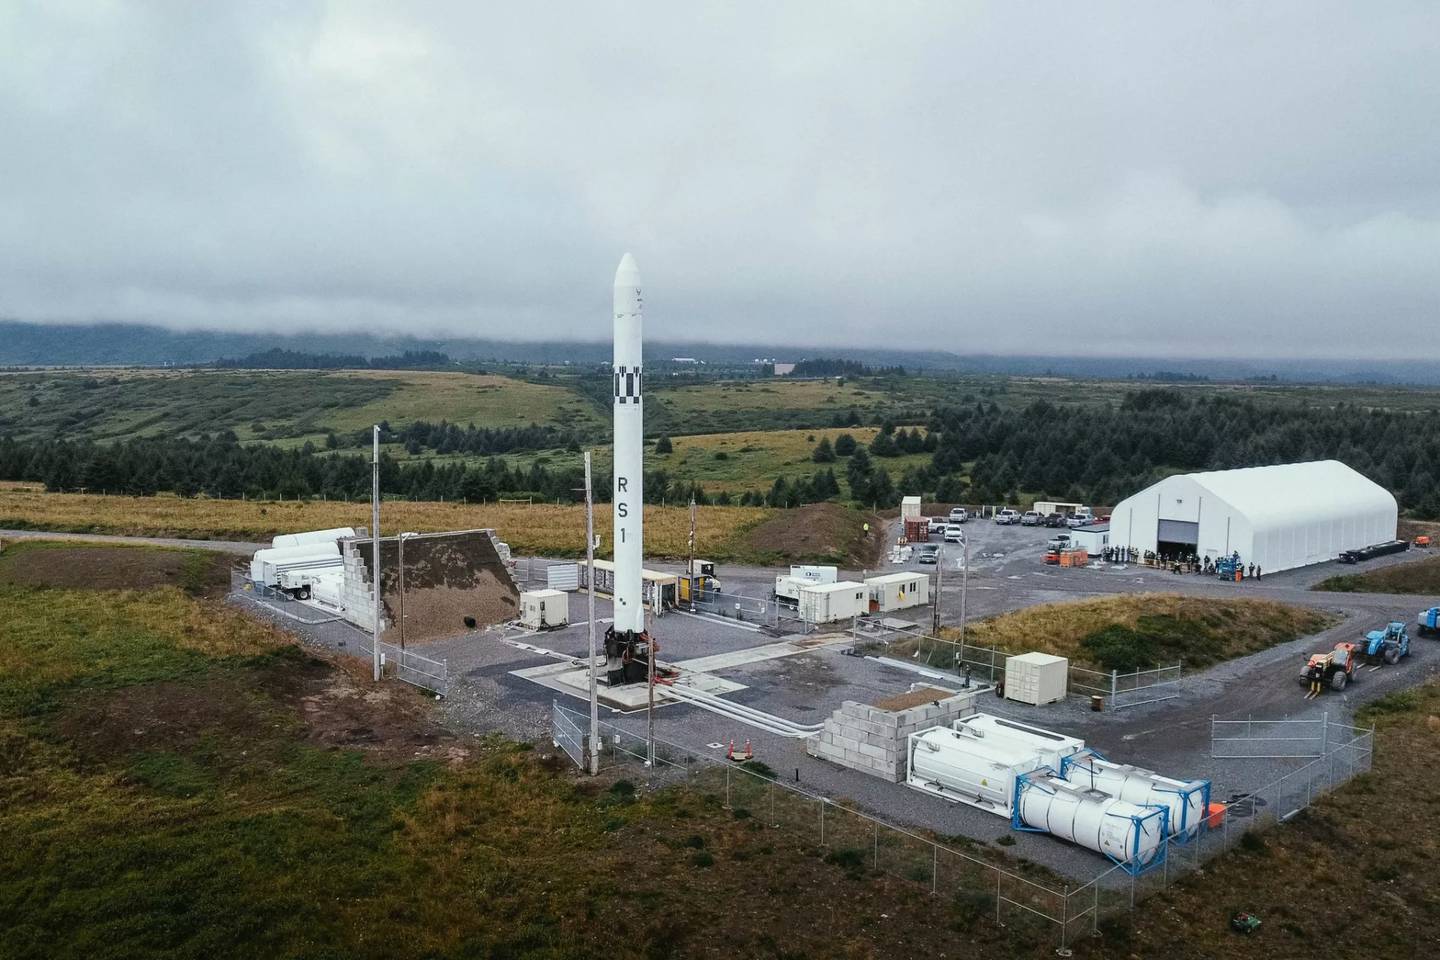 ABL Space System's RS1 rocket in Kodiak